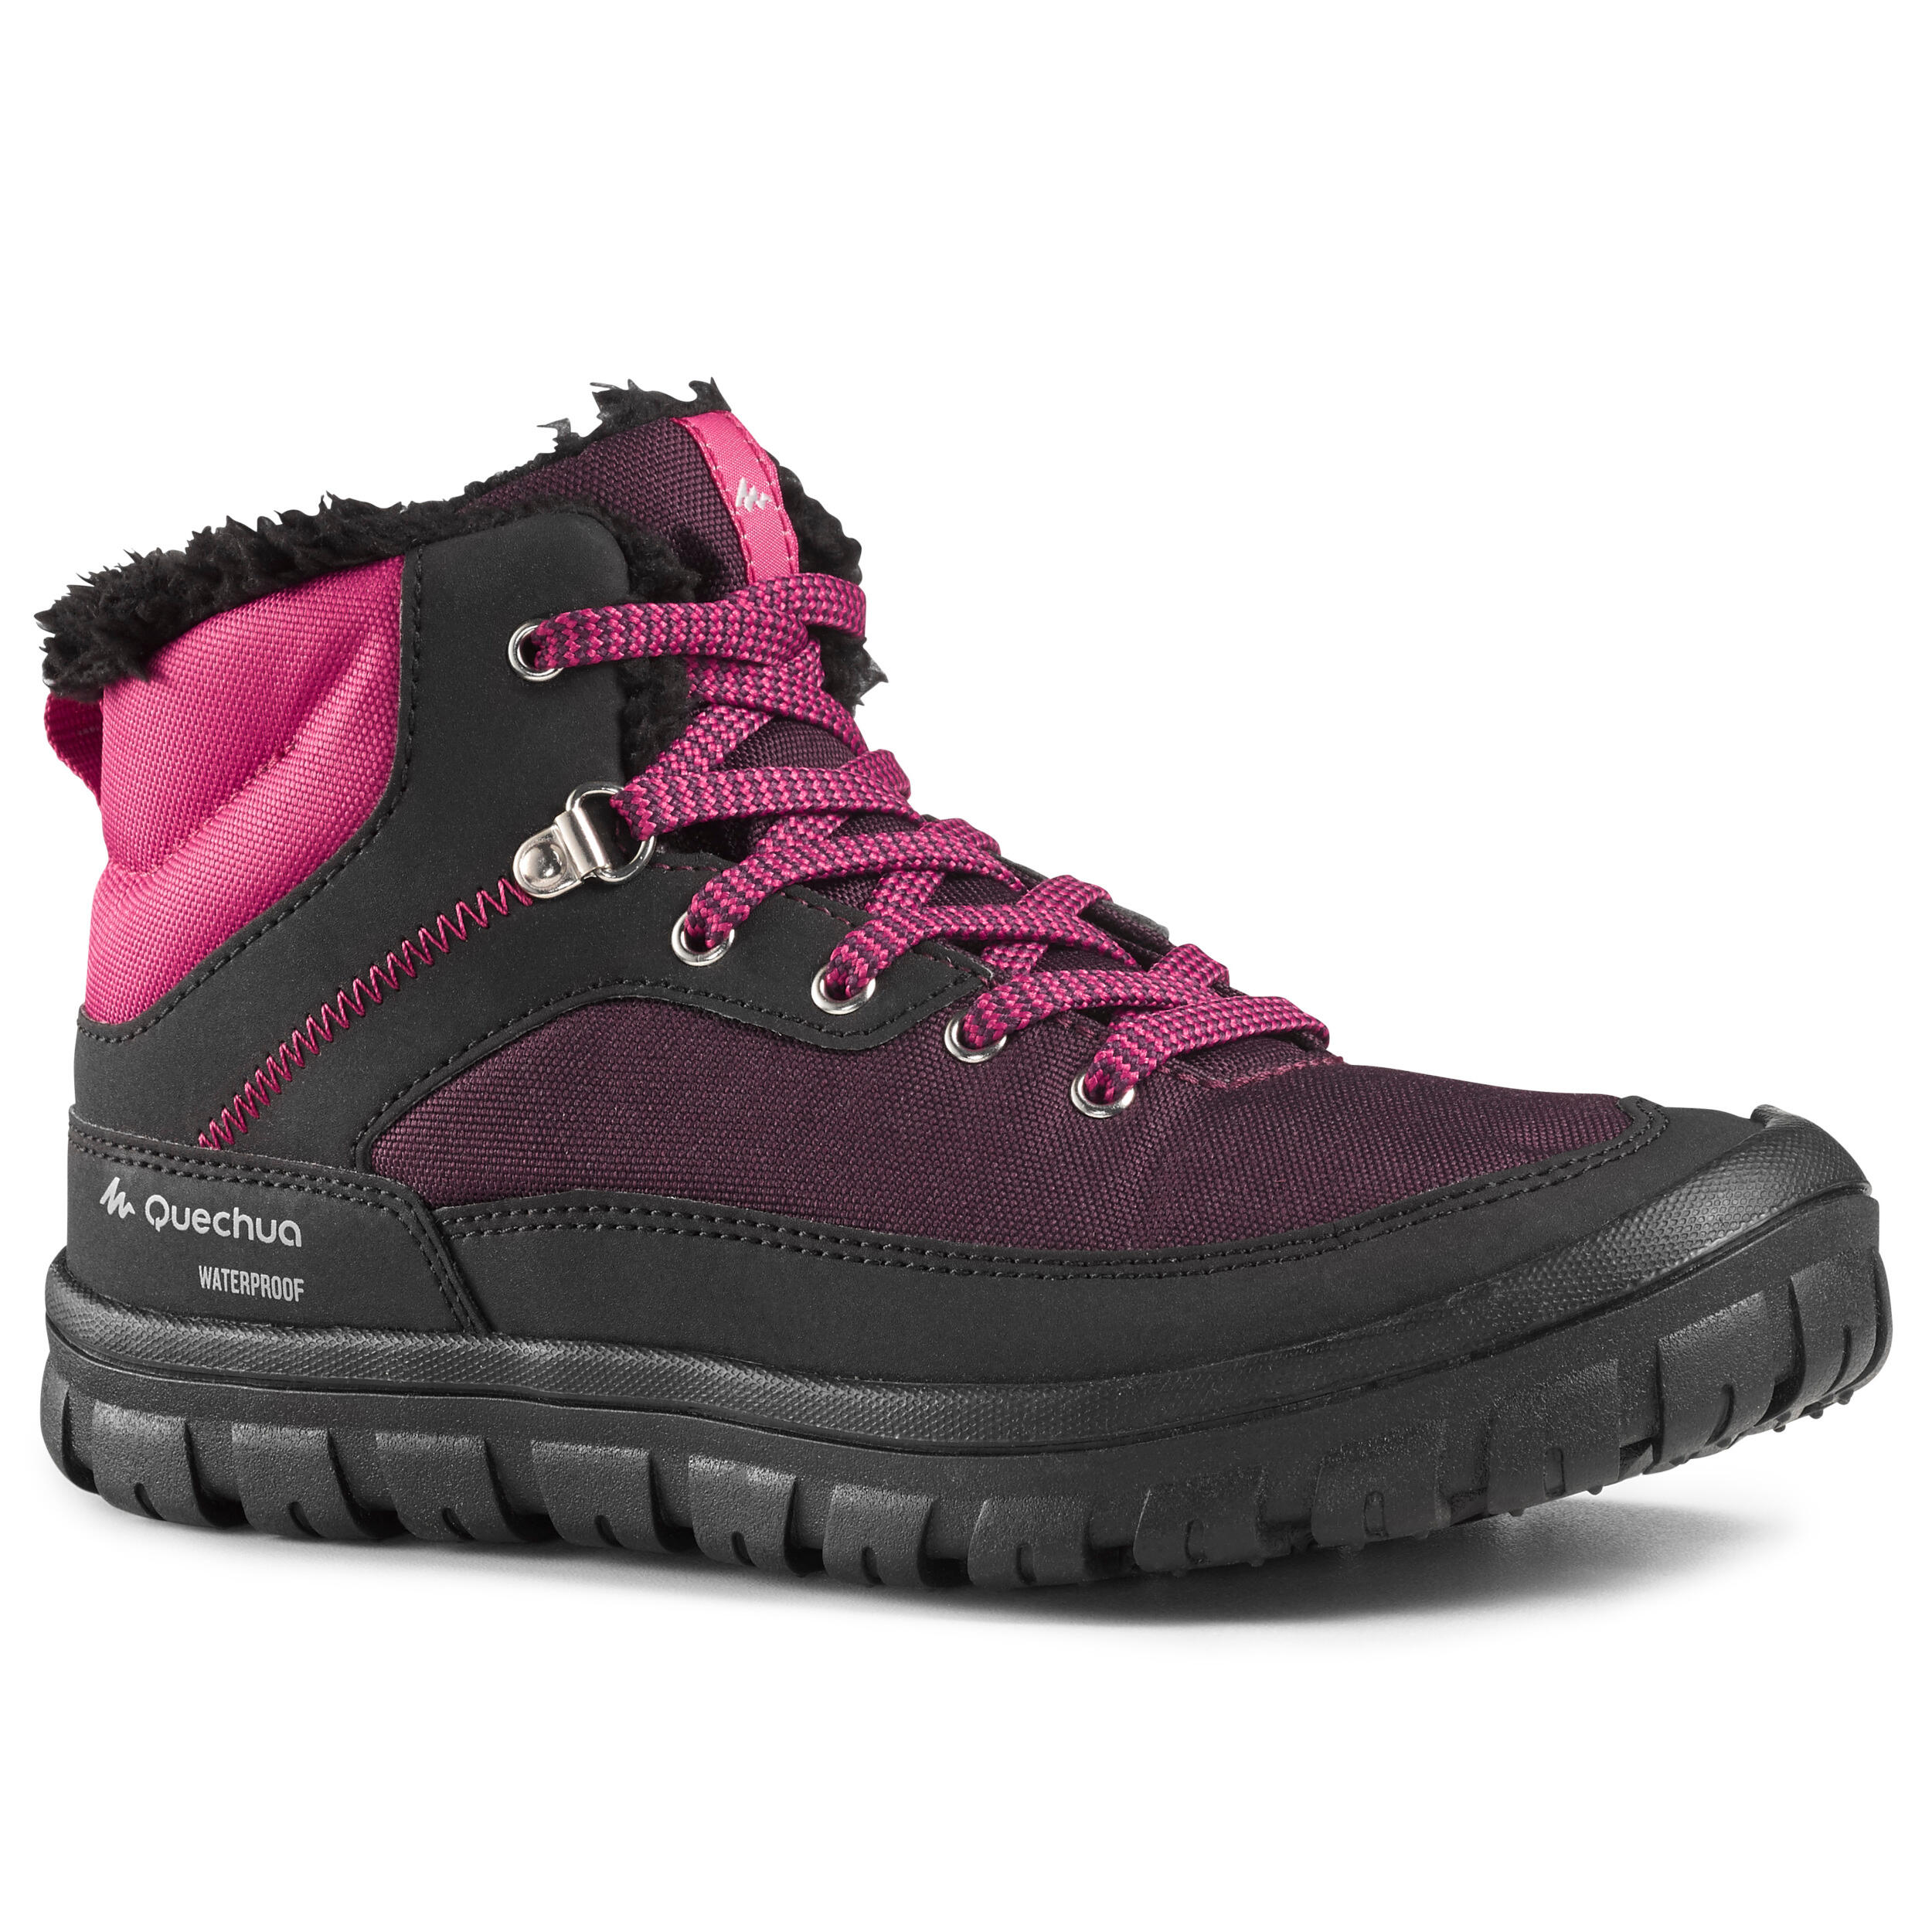 QUECHUA Kids’ Warm, Waterproof Lace-up Hiking Boots SH100 Warm Size 1 - 5.5